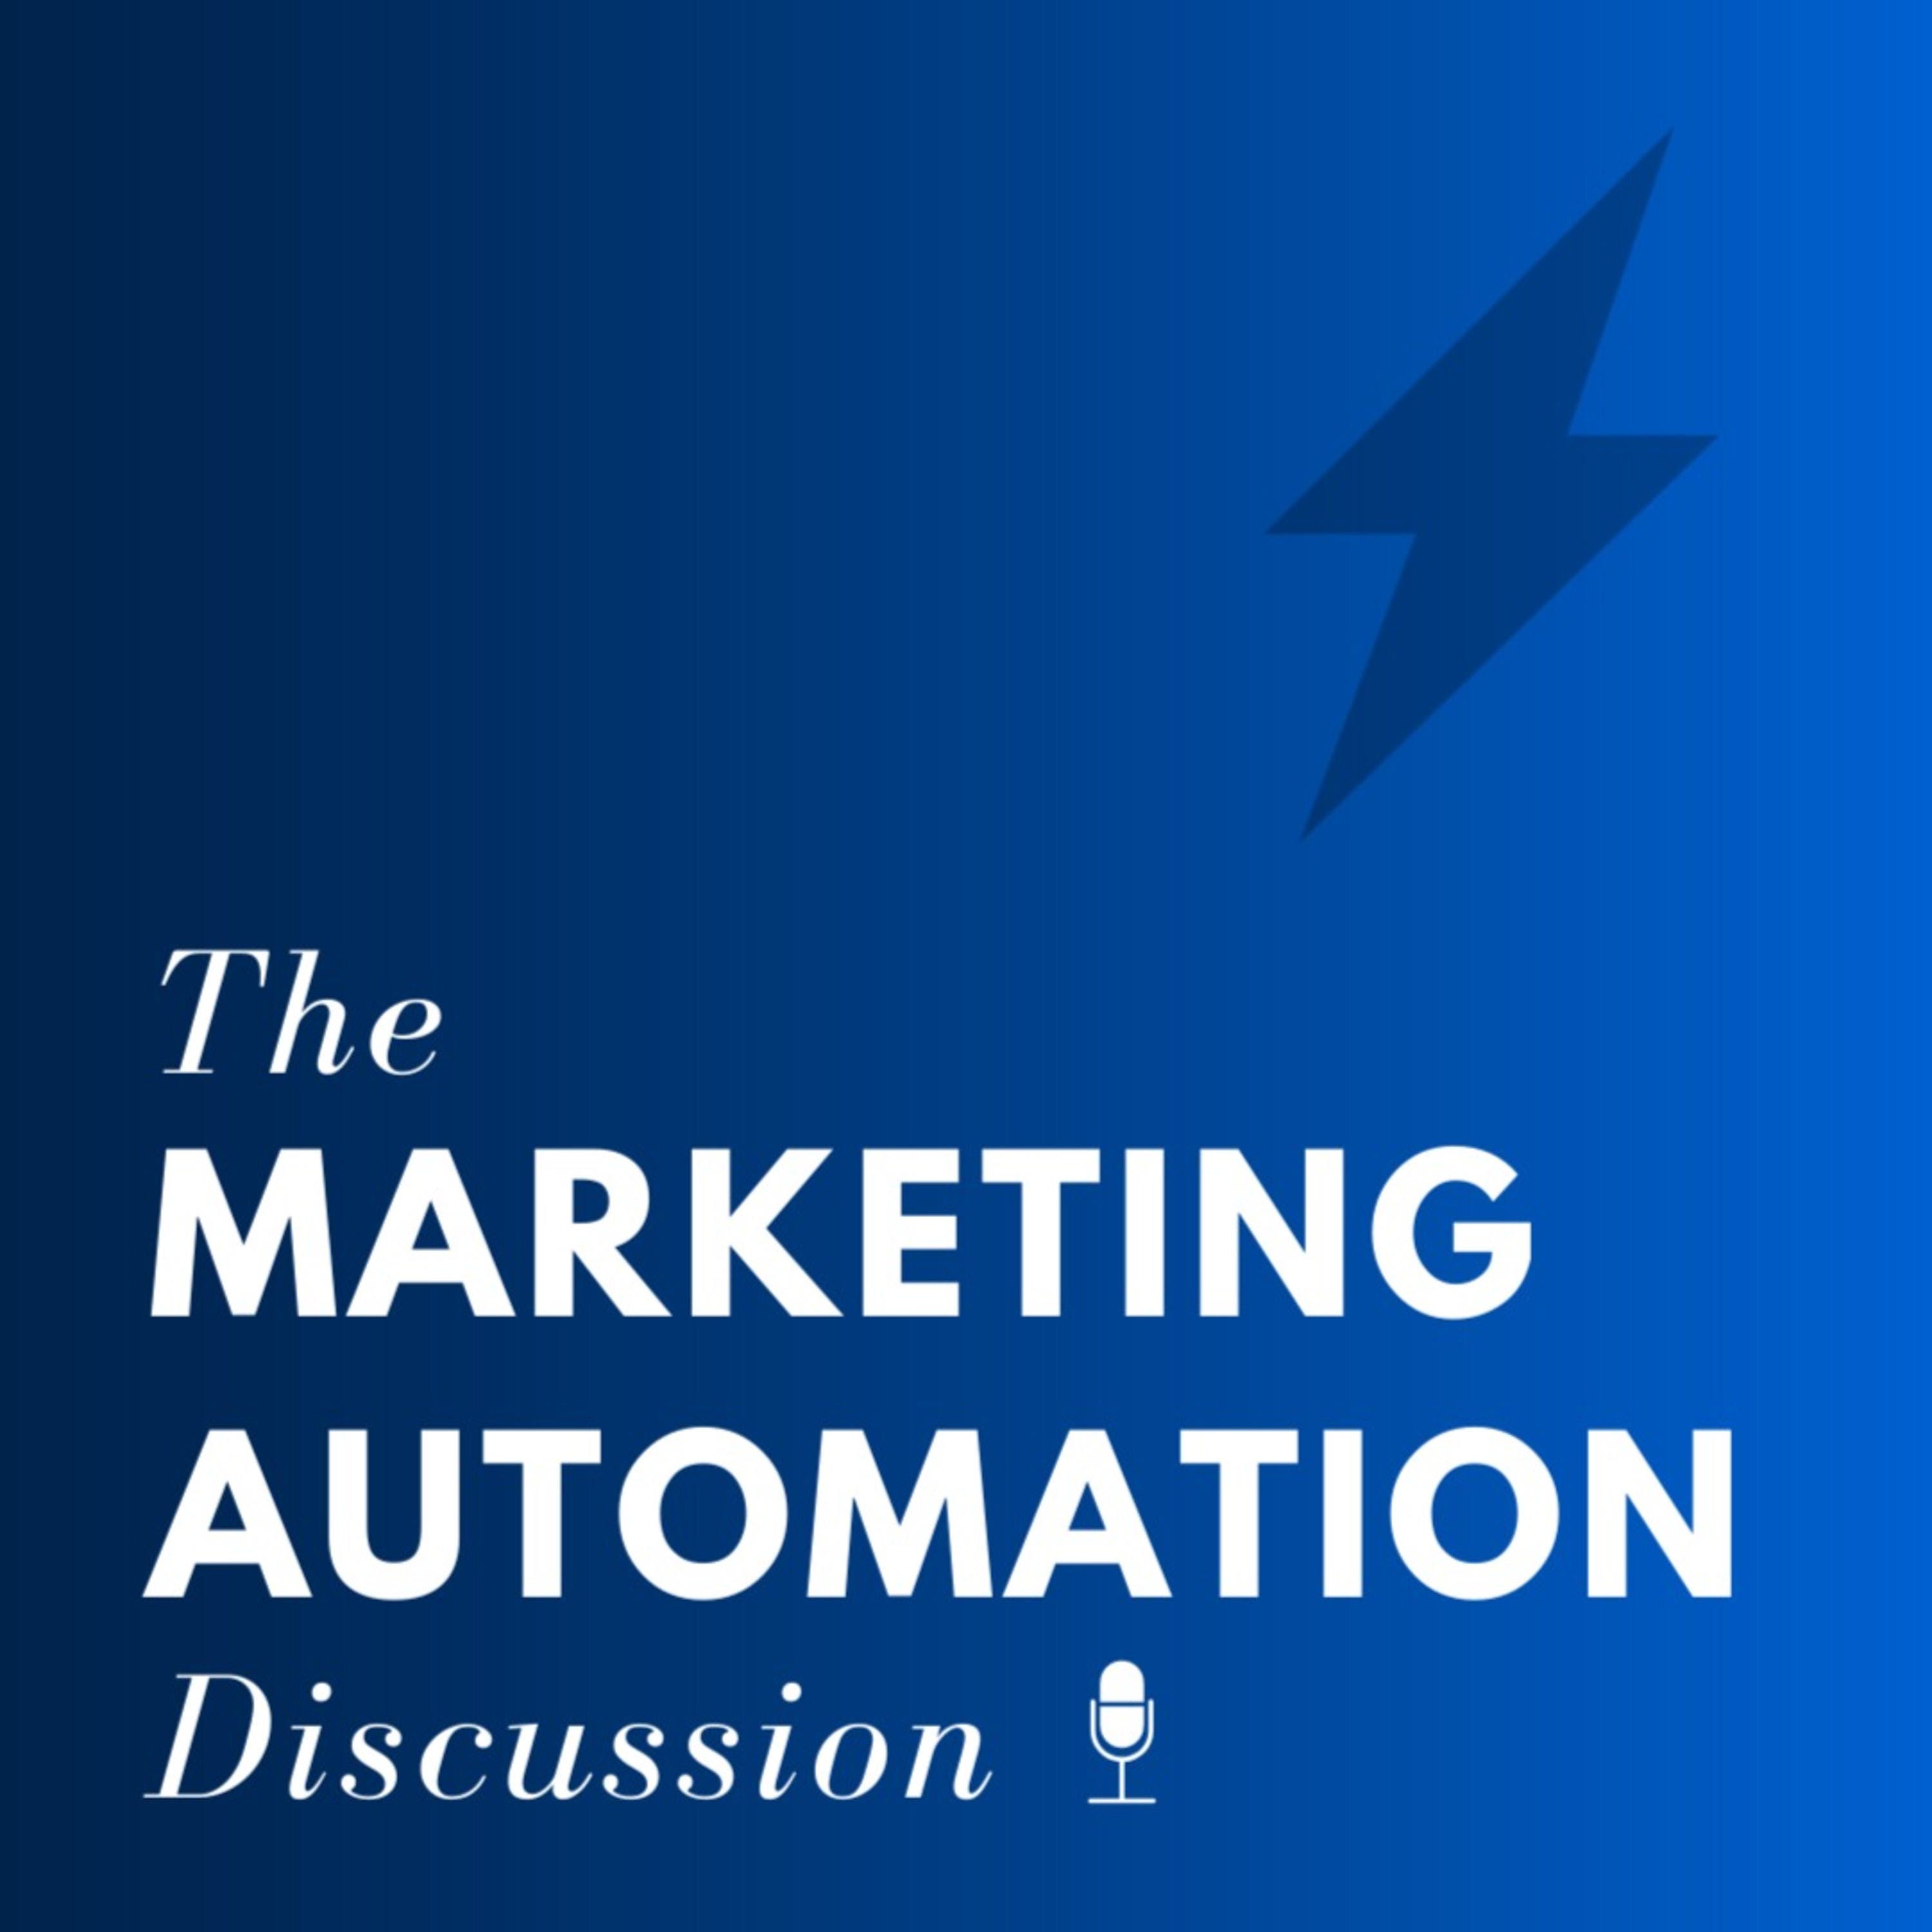 How To Remain ’HUMAN’ With Marketing Automation | Alex Glenn & Ryan Kulp, FOMO.com